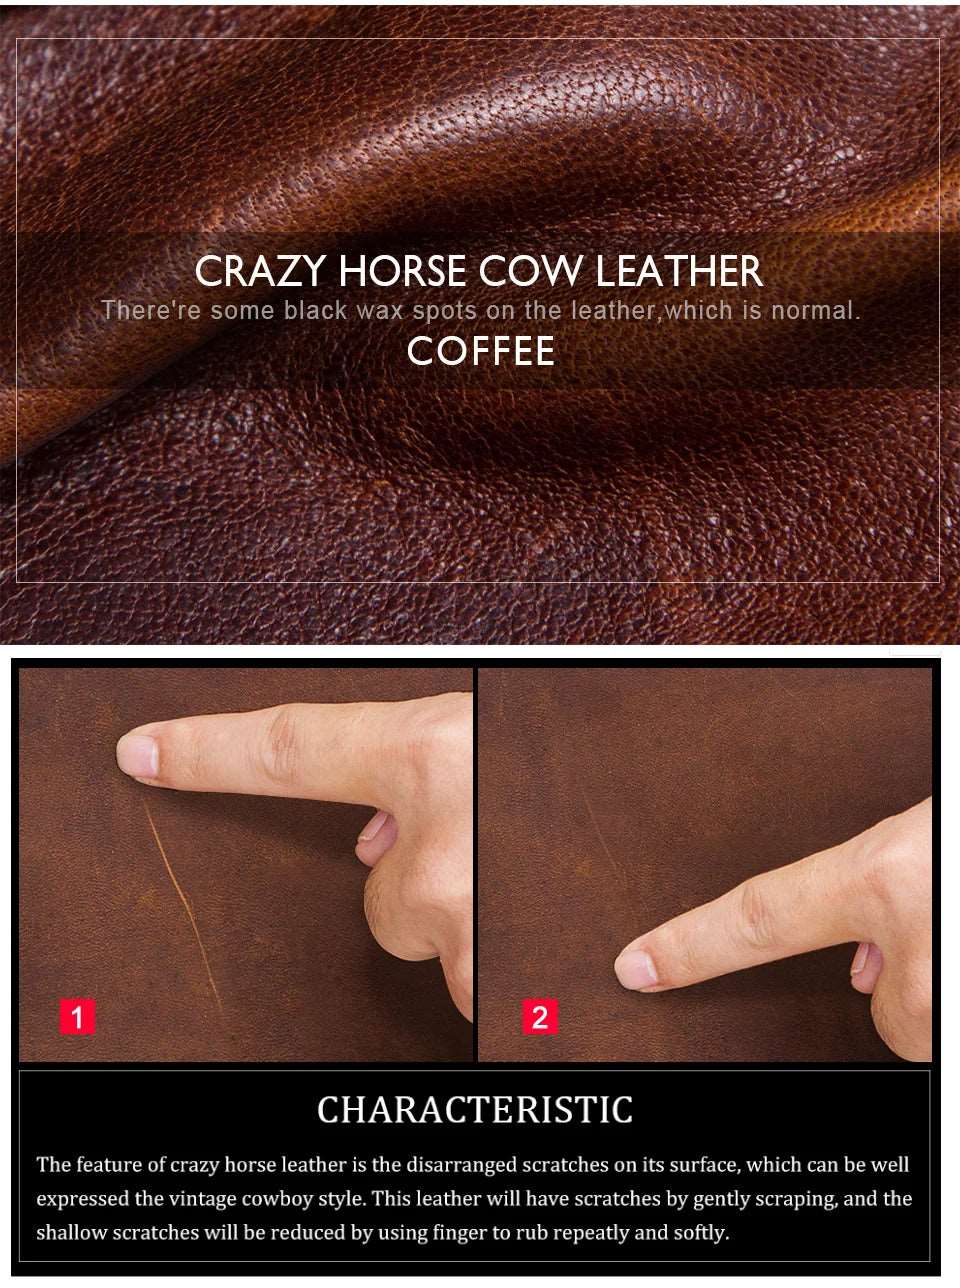 100% Genuine Leather Wallet Zipper Engraving Coin Short RFID blocking